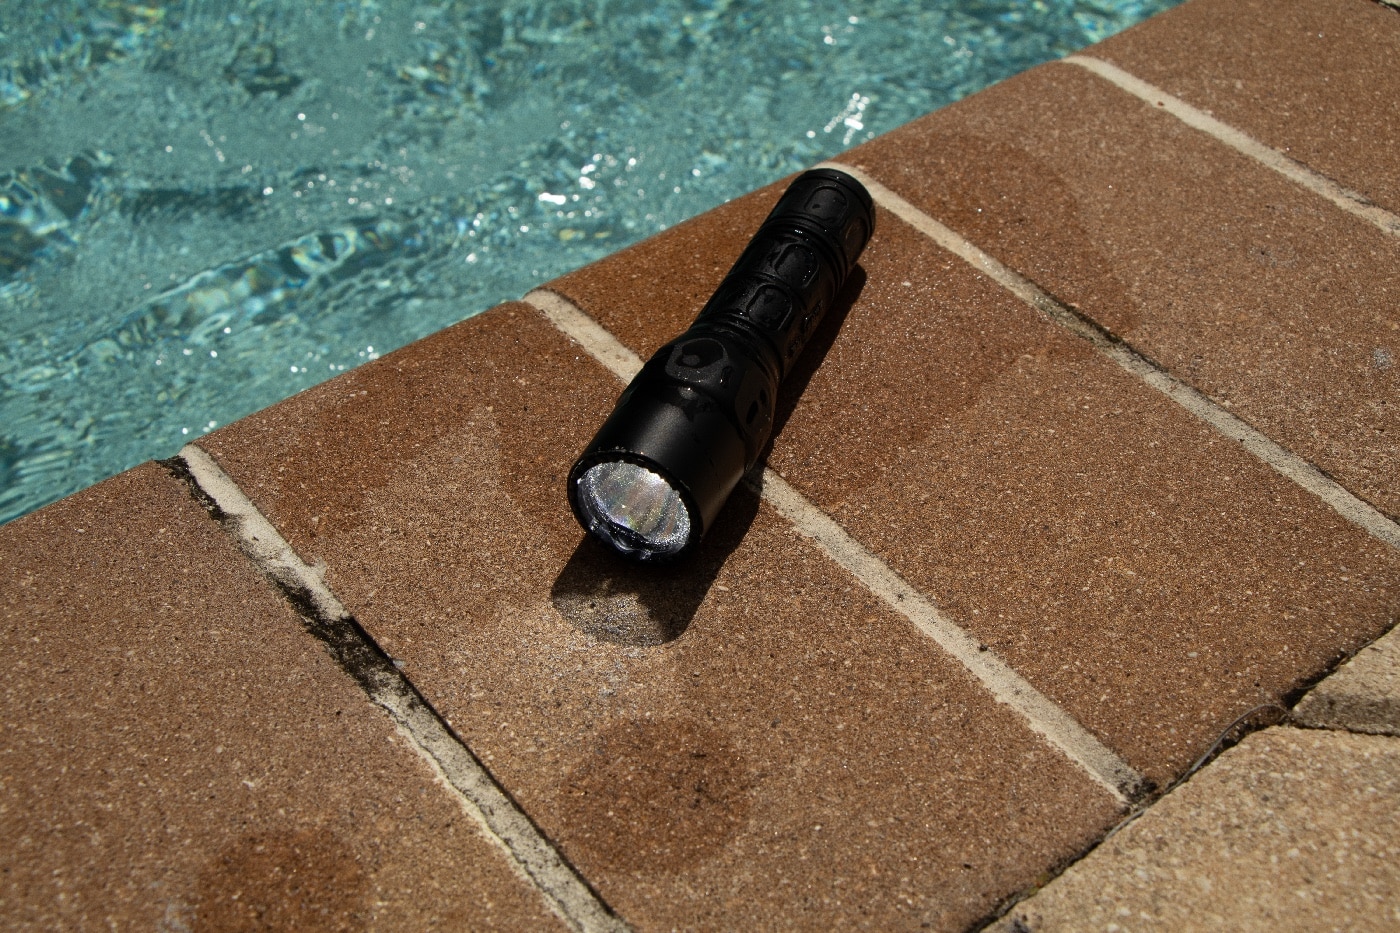 Surefire G2X Tactical flashlight waterproof testing